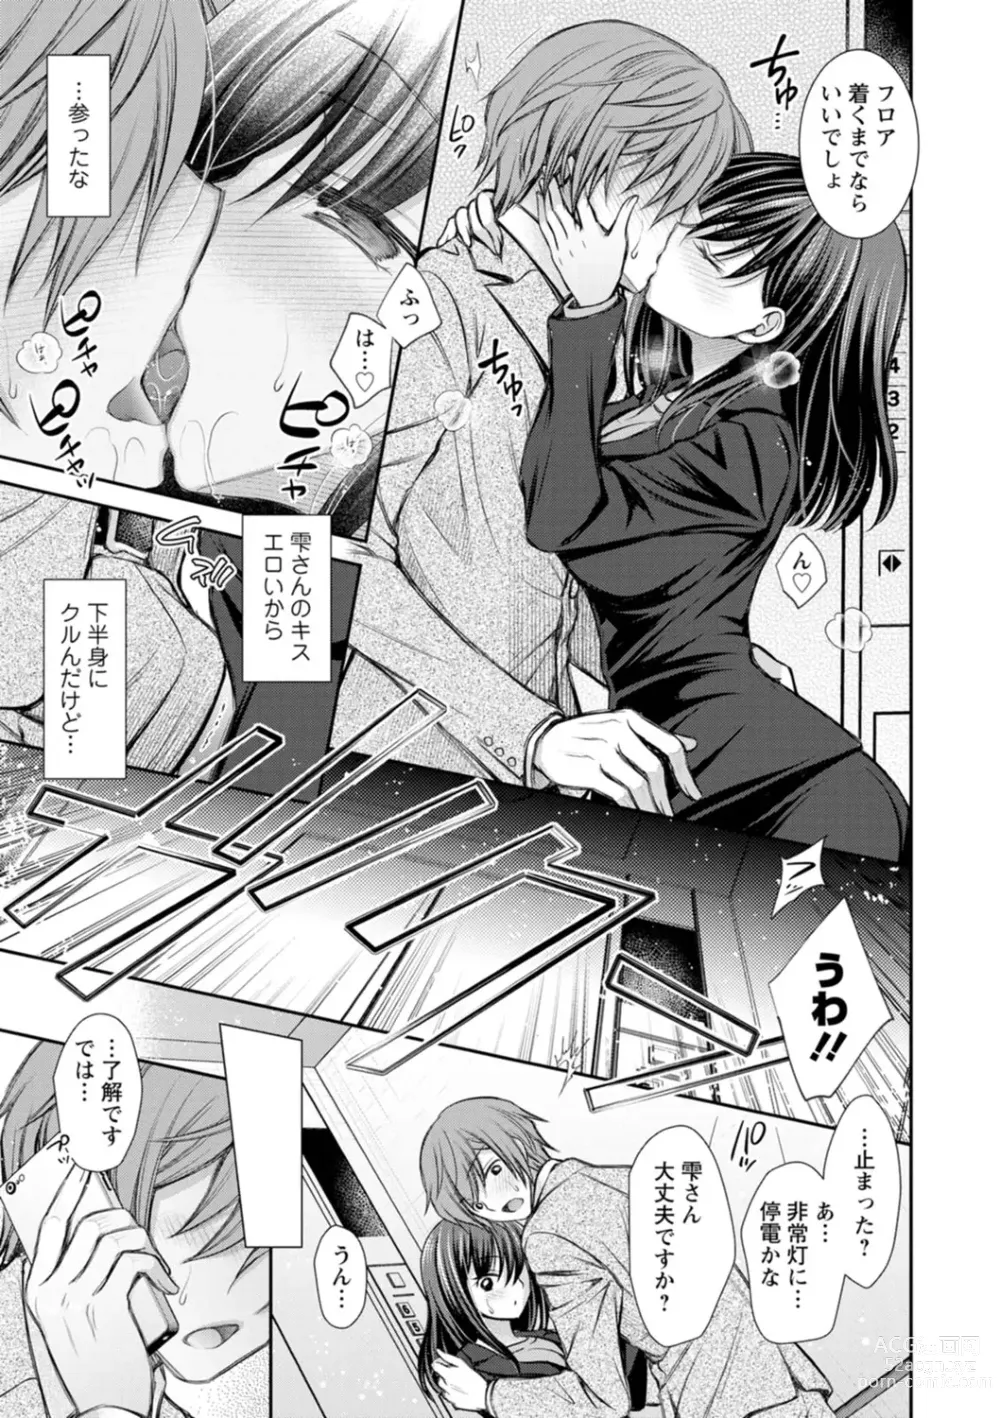 Page 9 of manga Furete Mitakute.